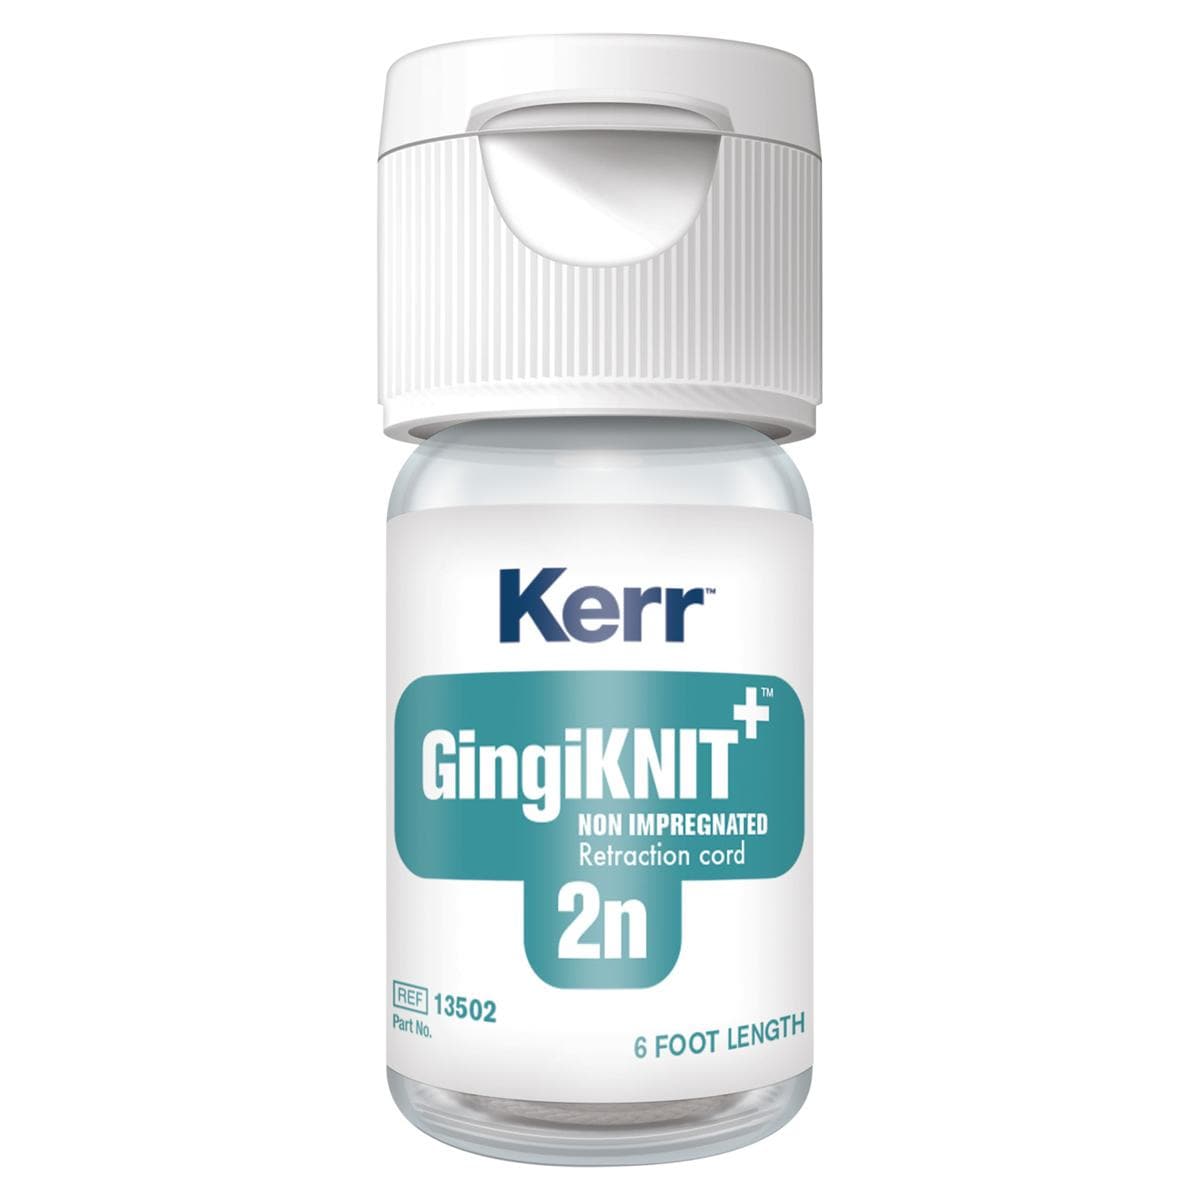 GingiKnit+? - 2n